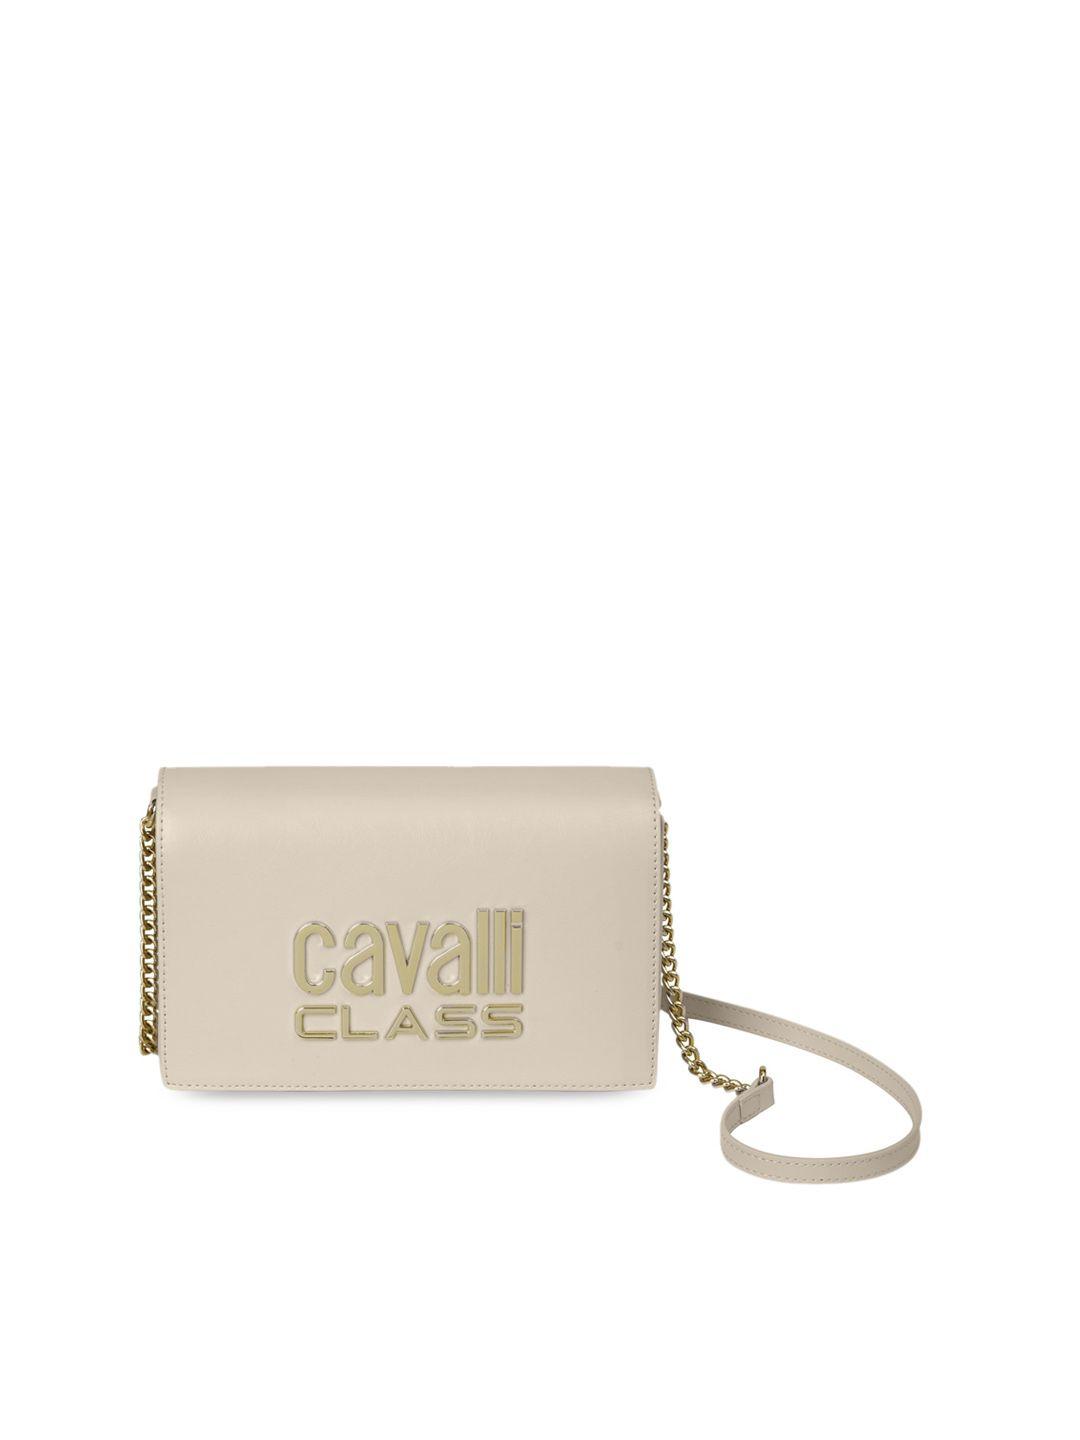 cavalli class embellished structured sling bag